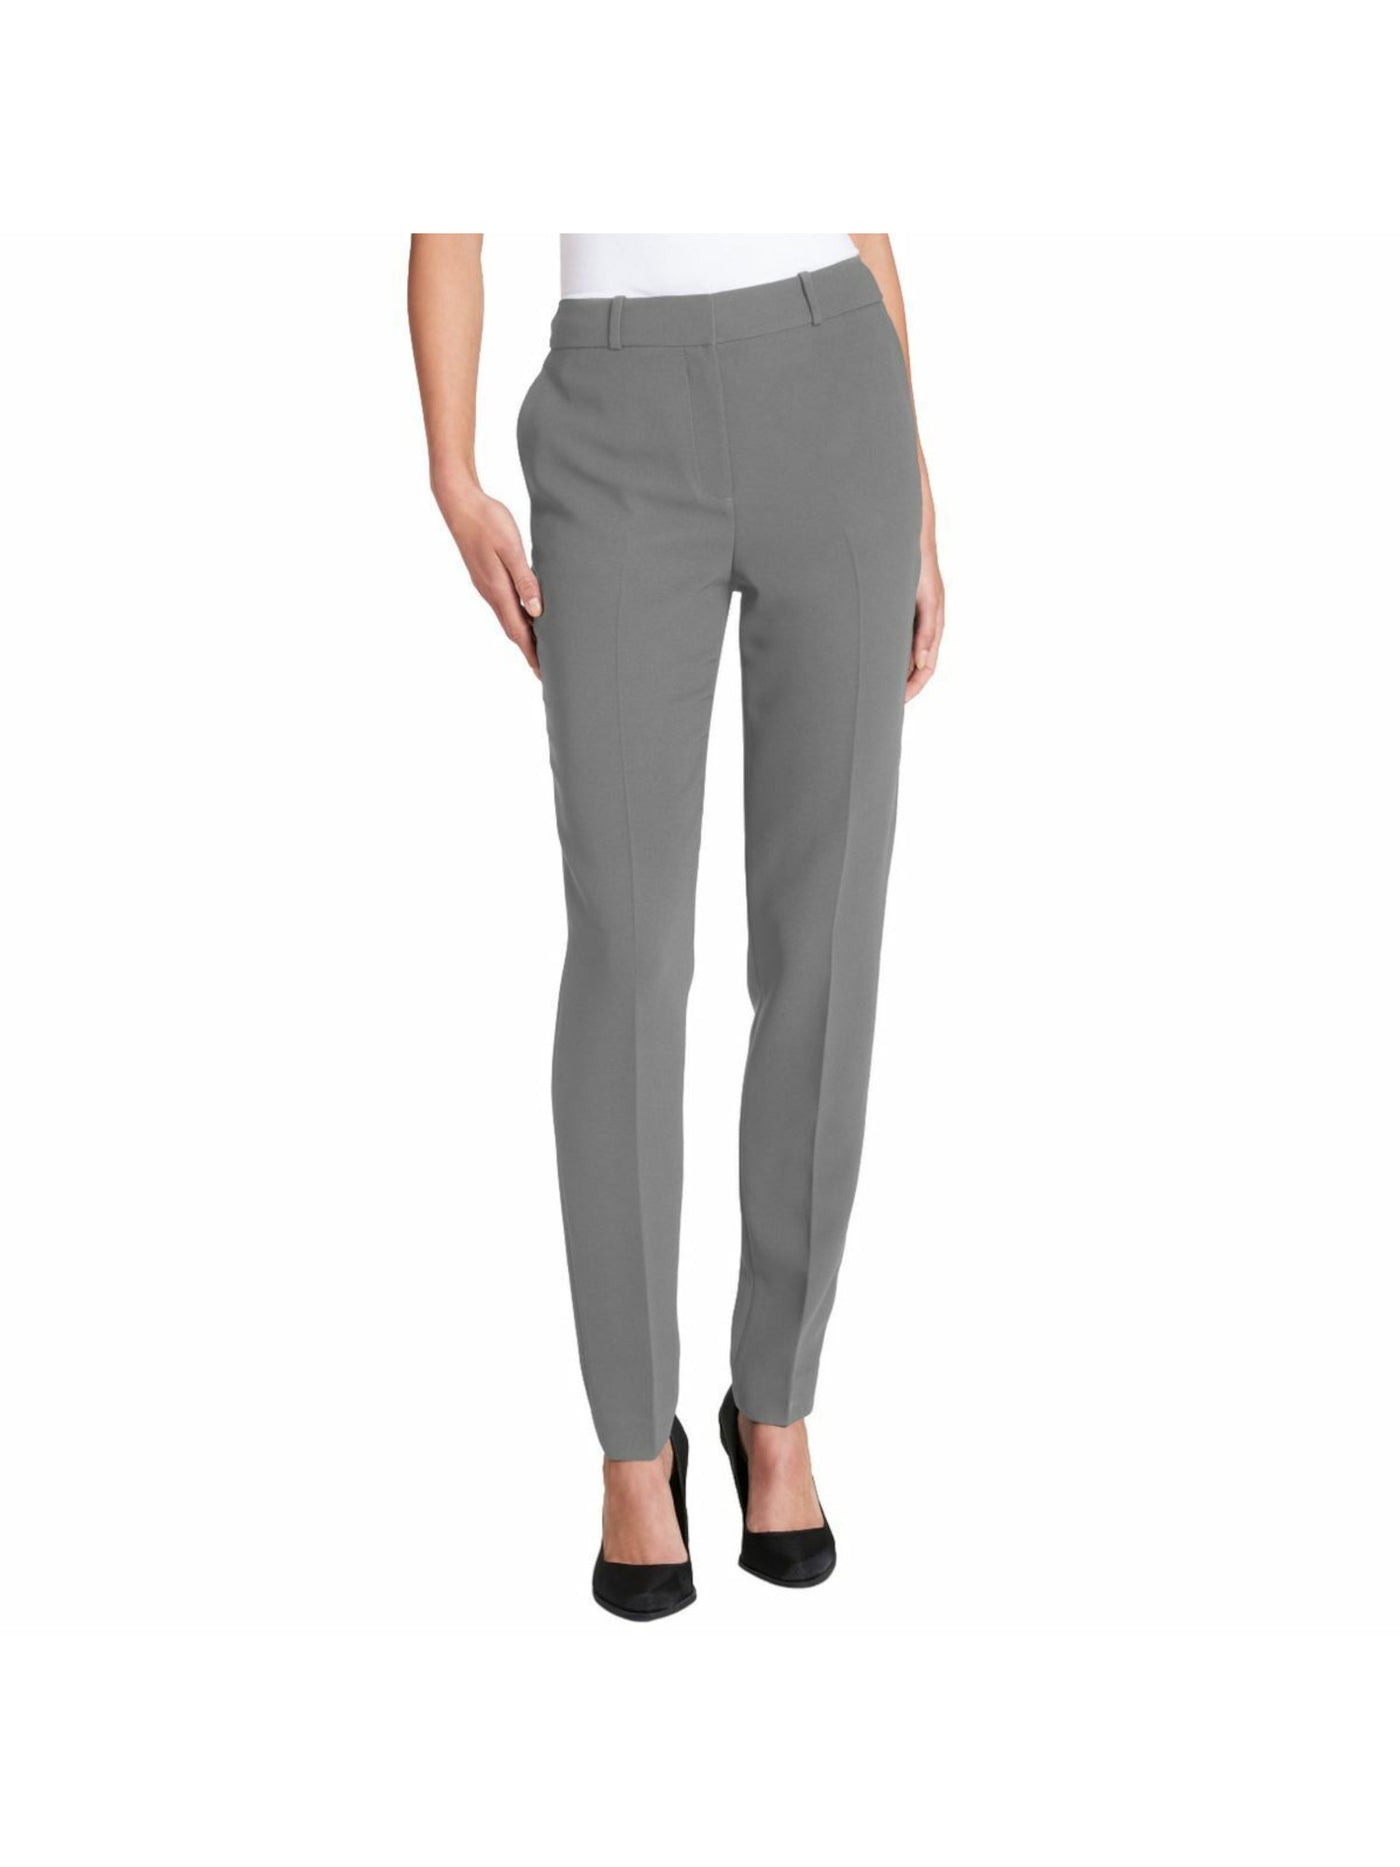 DKNY Womens Gray Zippered Wear To Work Skinny Pants 18